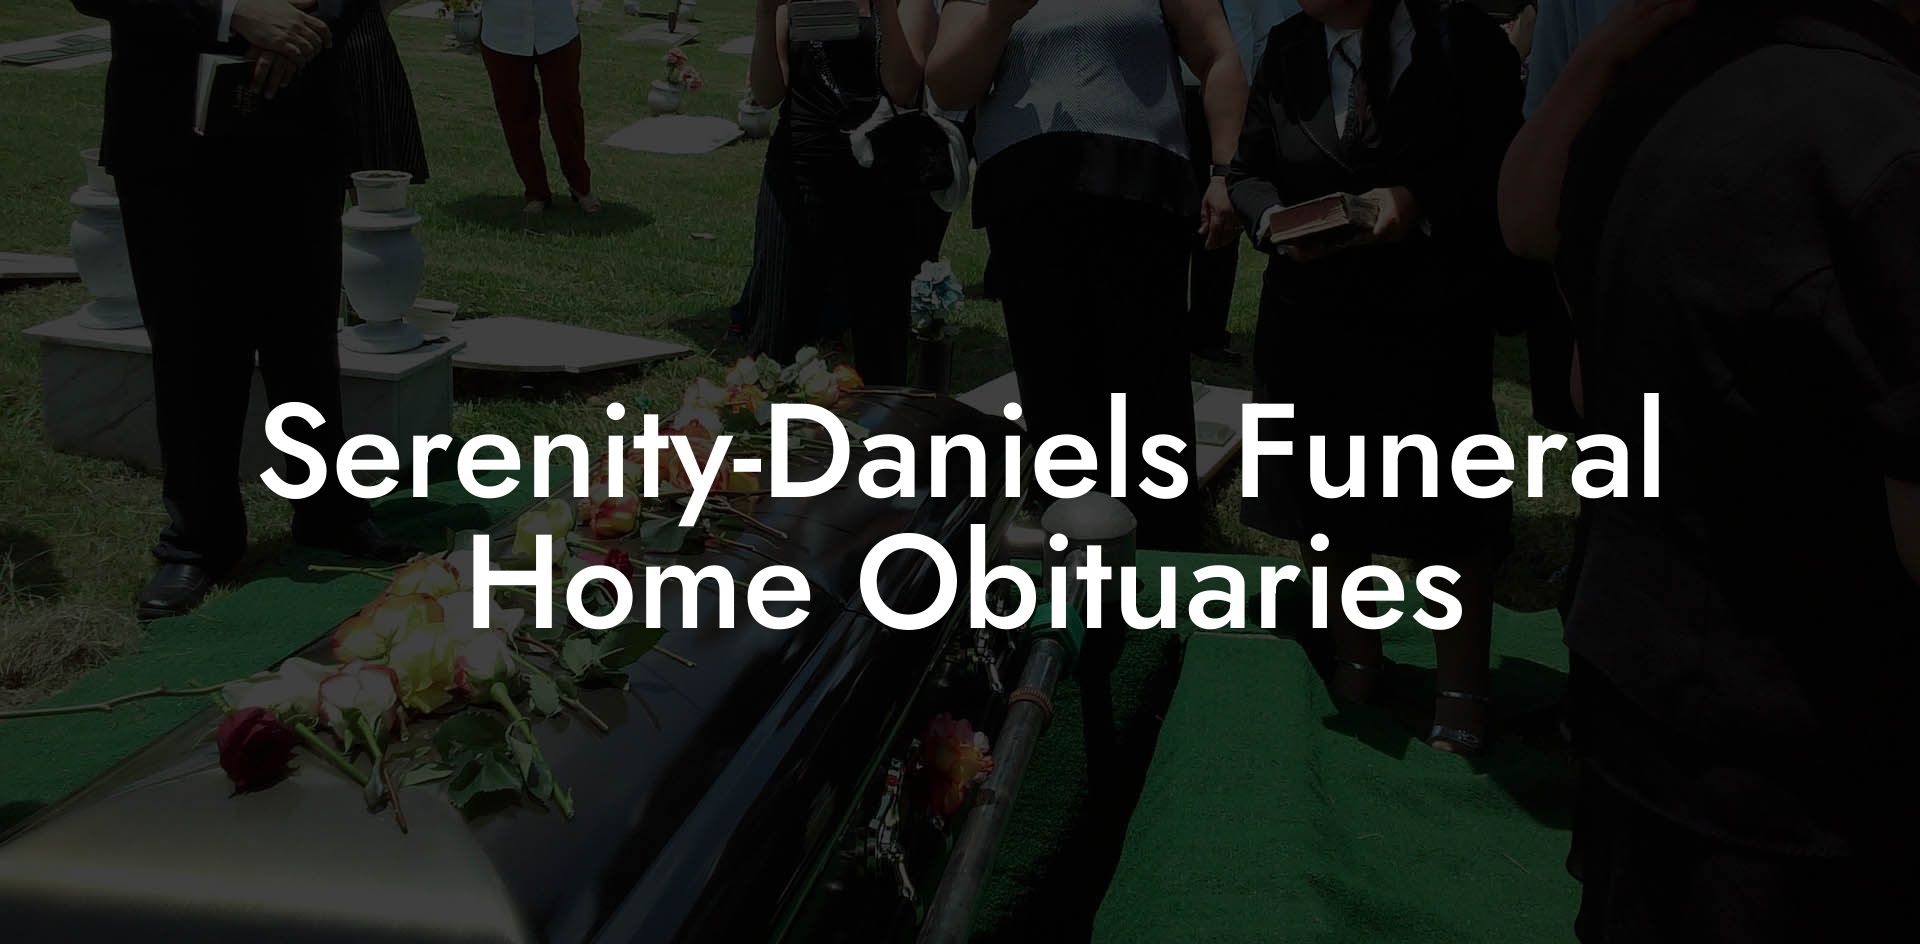 Serenity-Daniels Funeral Home Obituaries